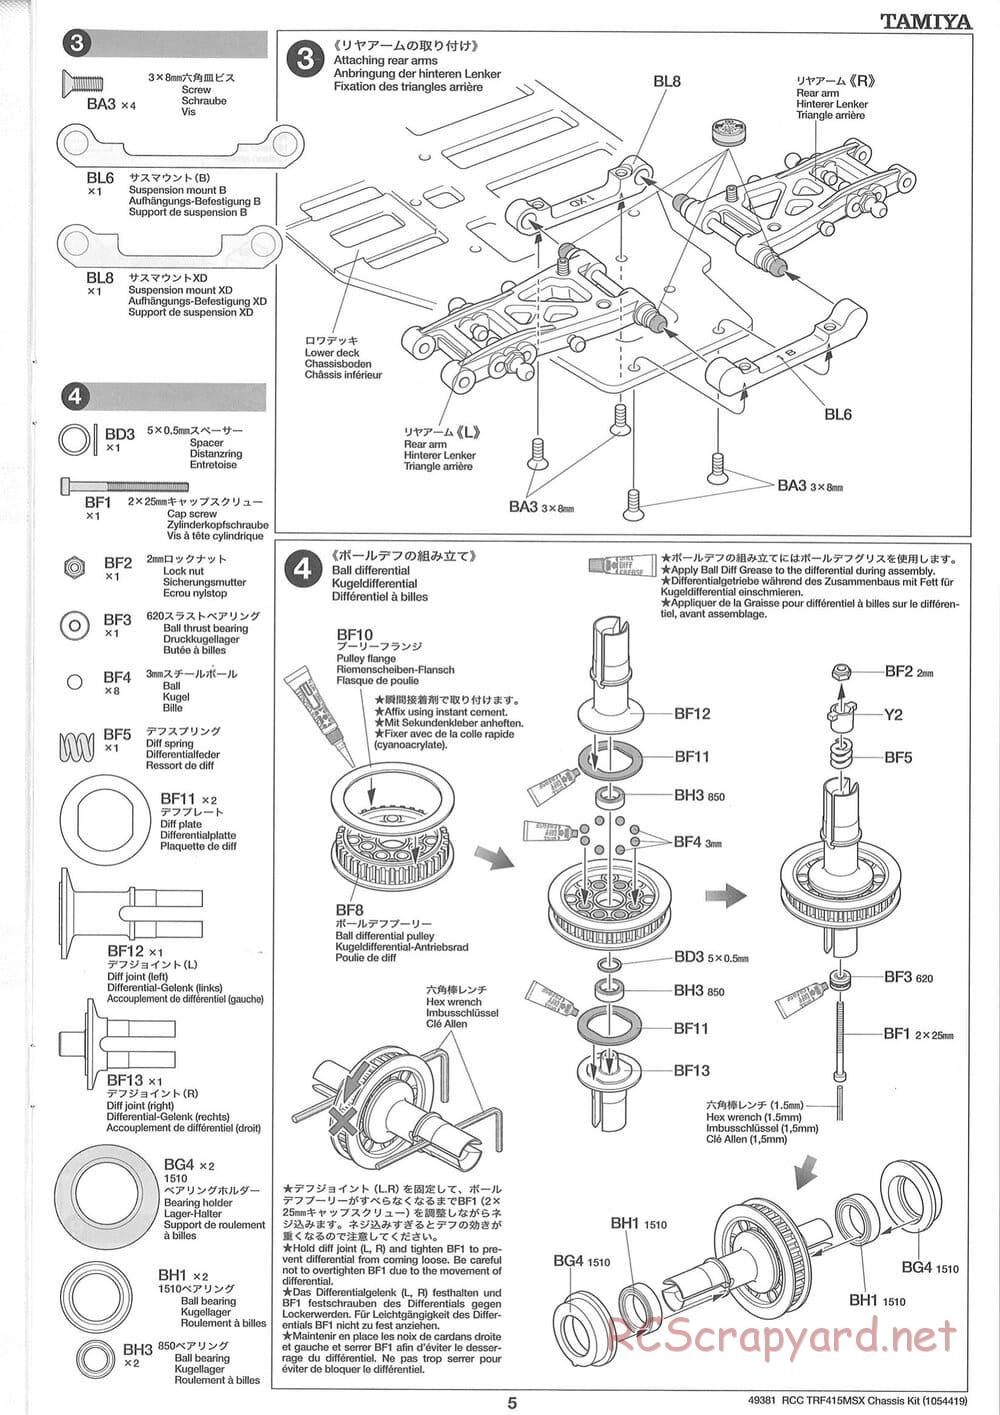 Tamiya - TRF415-MSX Chassis - Manual - Page 5